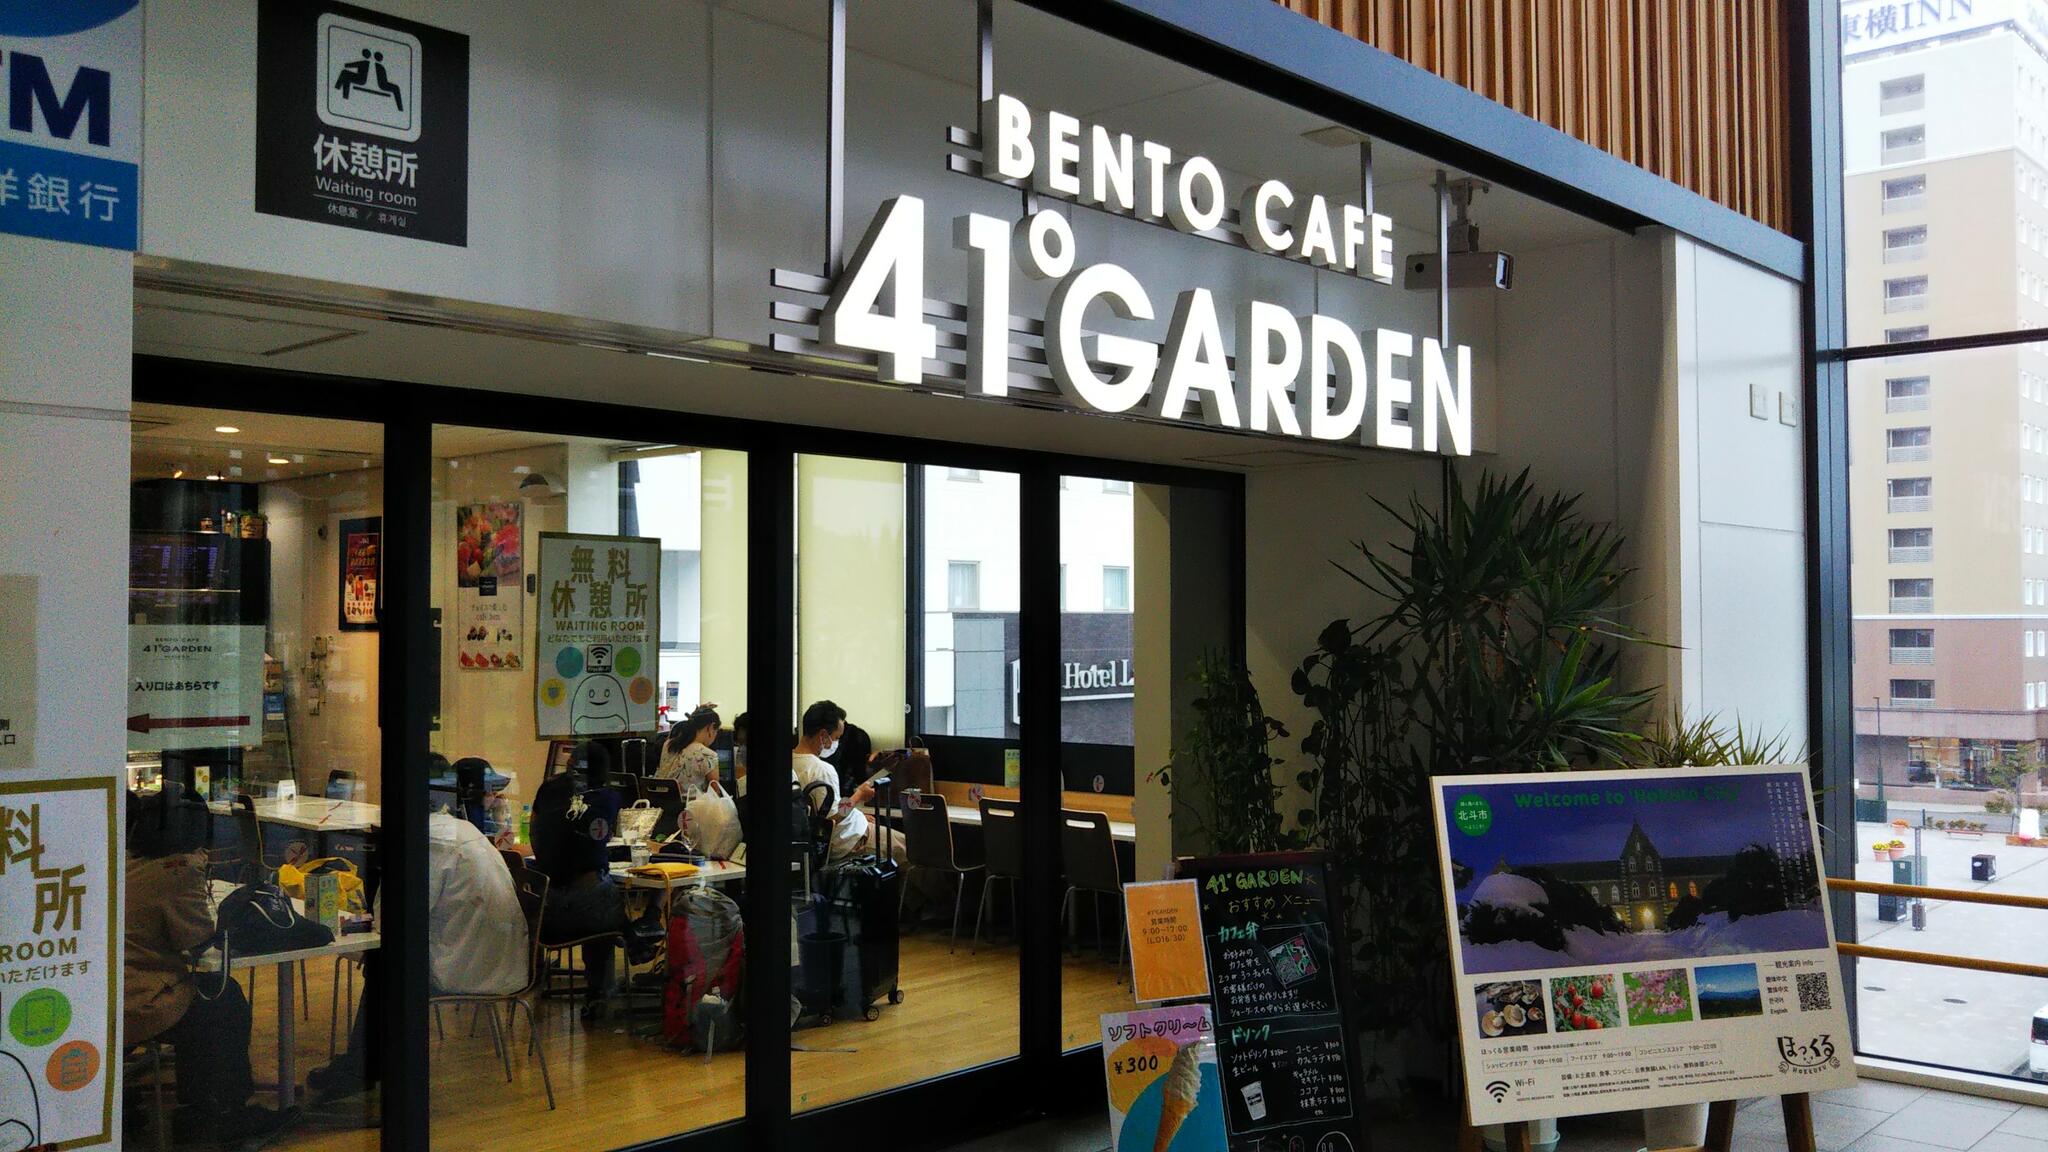 BENTO CAFE 41°GARDENの代表写真2